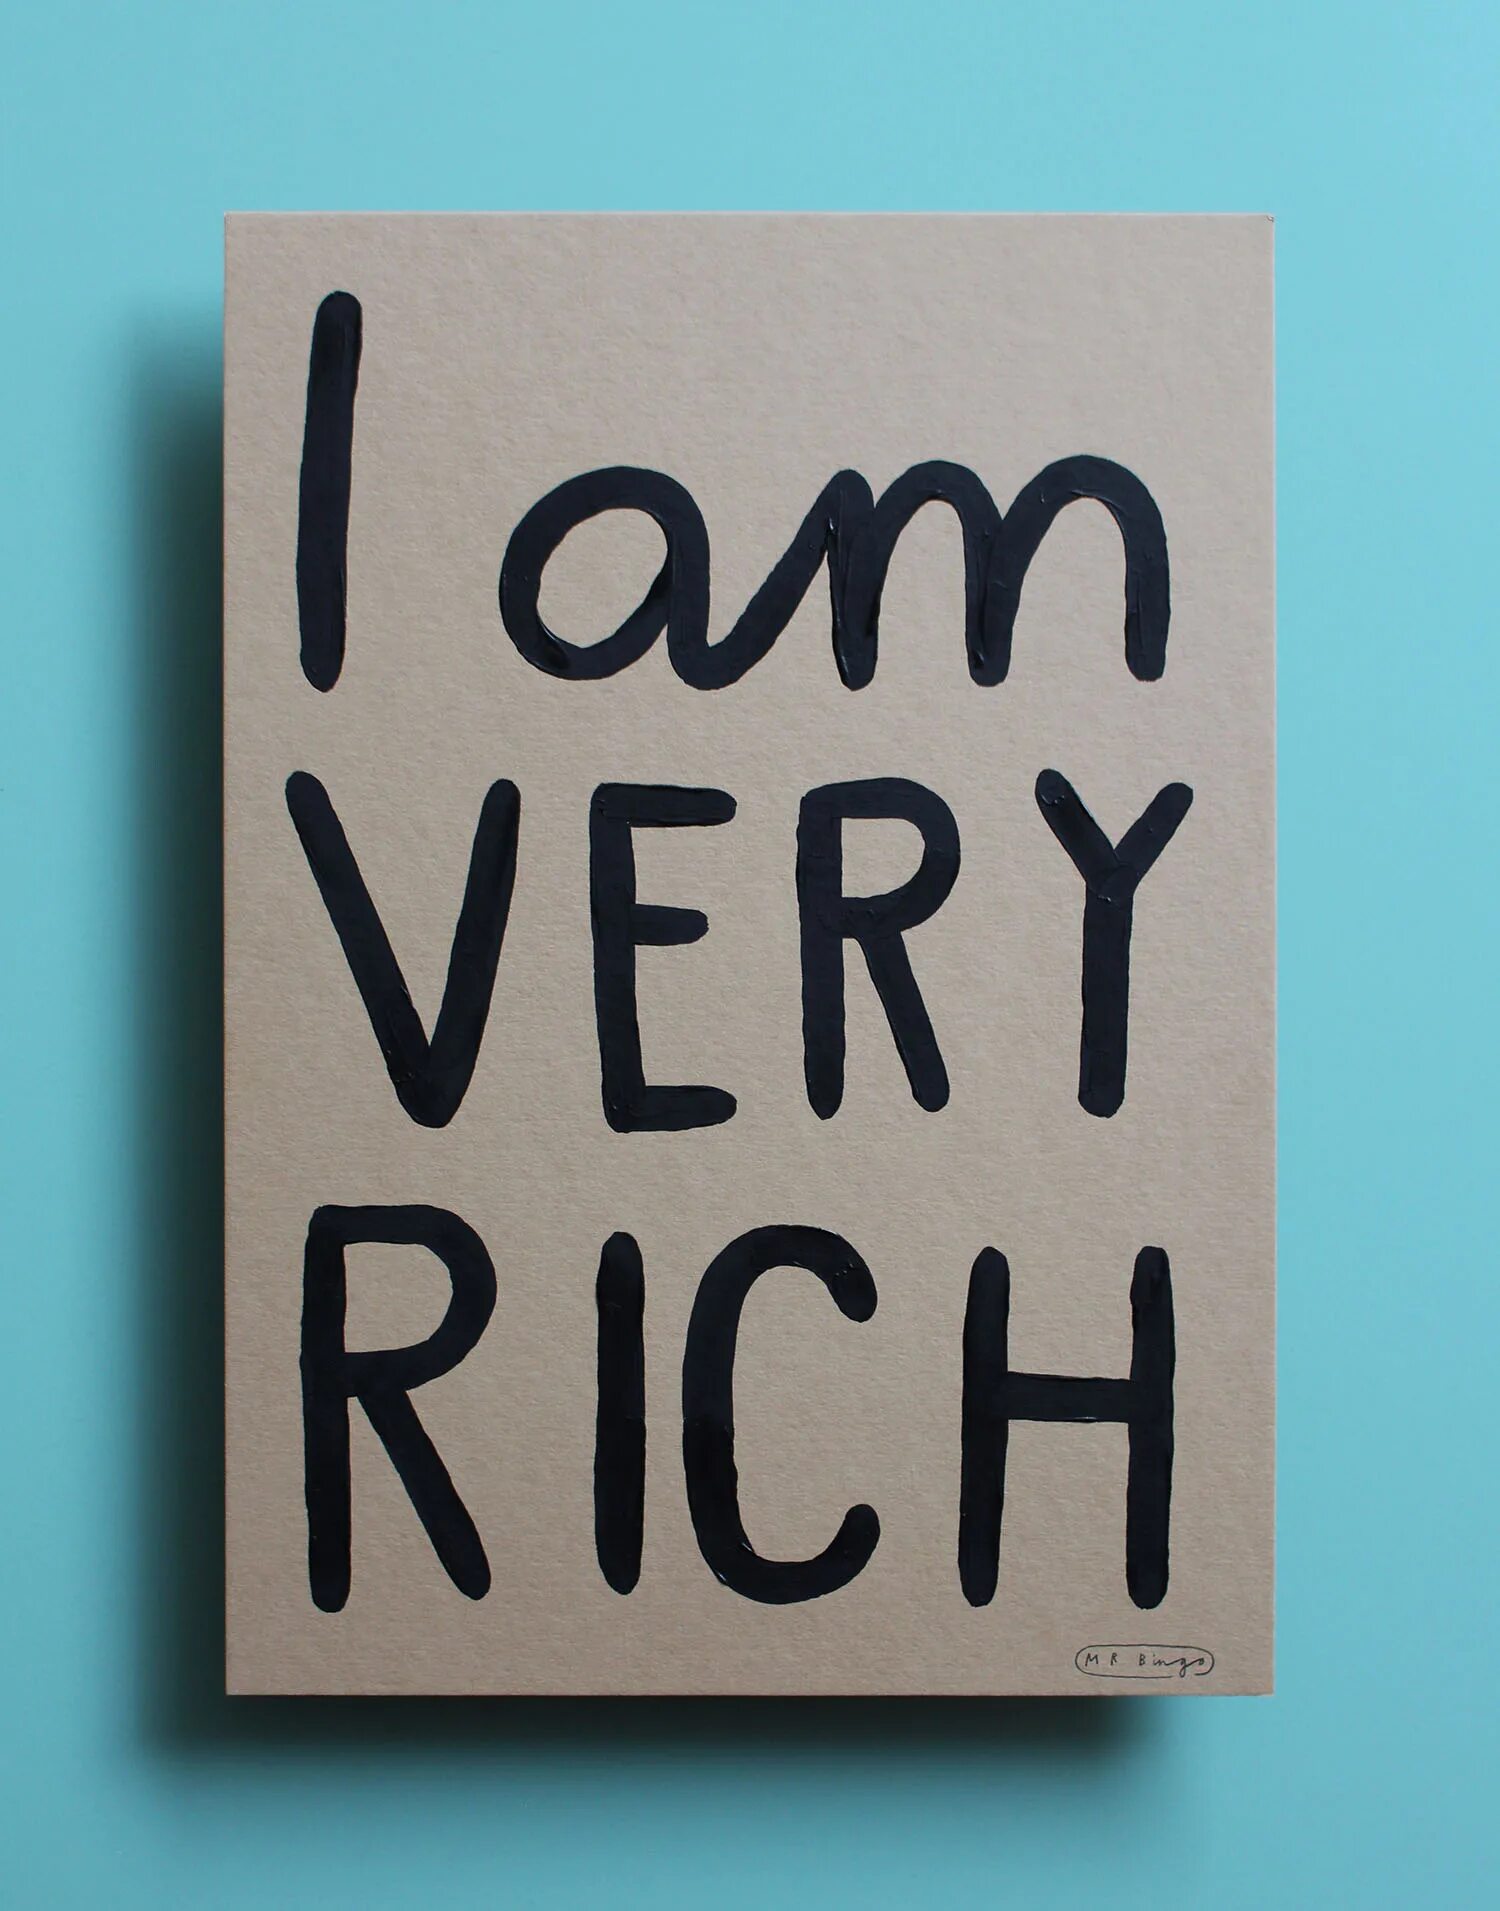 I am Rich. I am Rich приложение. Мистер Бинго. Very Rich. Be rich перевод